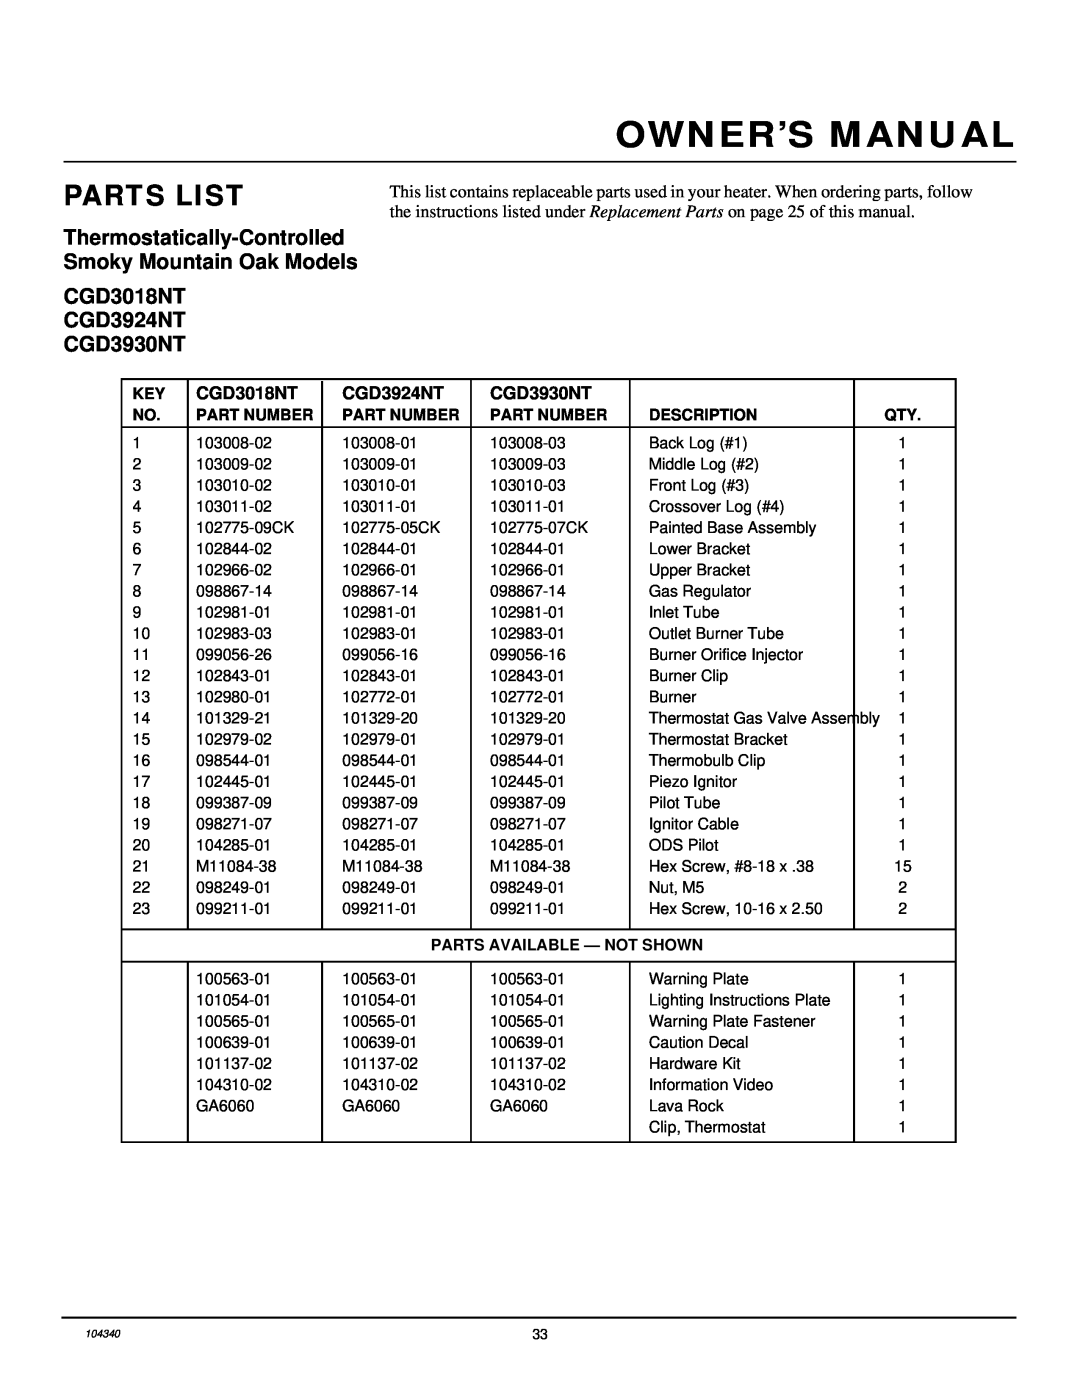 Desa CCL3924NT Parts List, CGD3018NT CGD3924NT CGD3930NT, Part Number, Description, Parts Available - Not Shown 